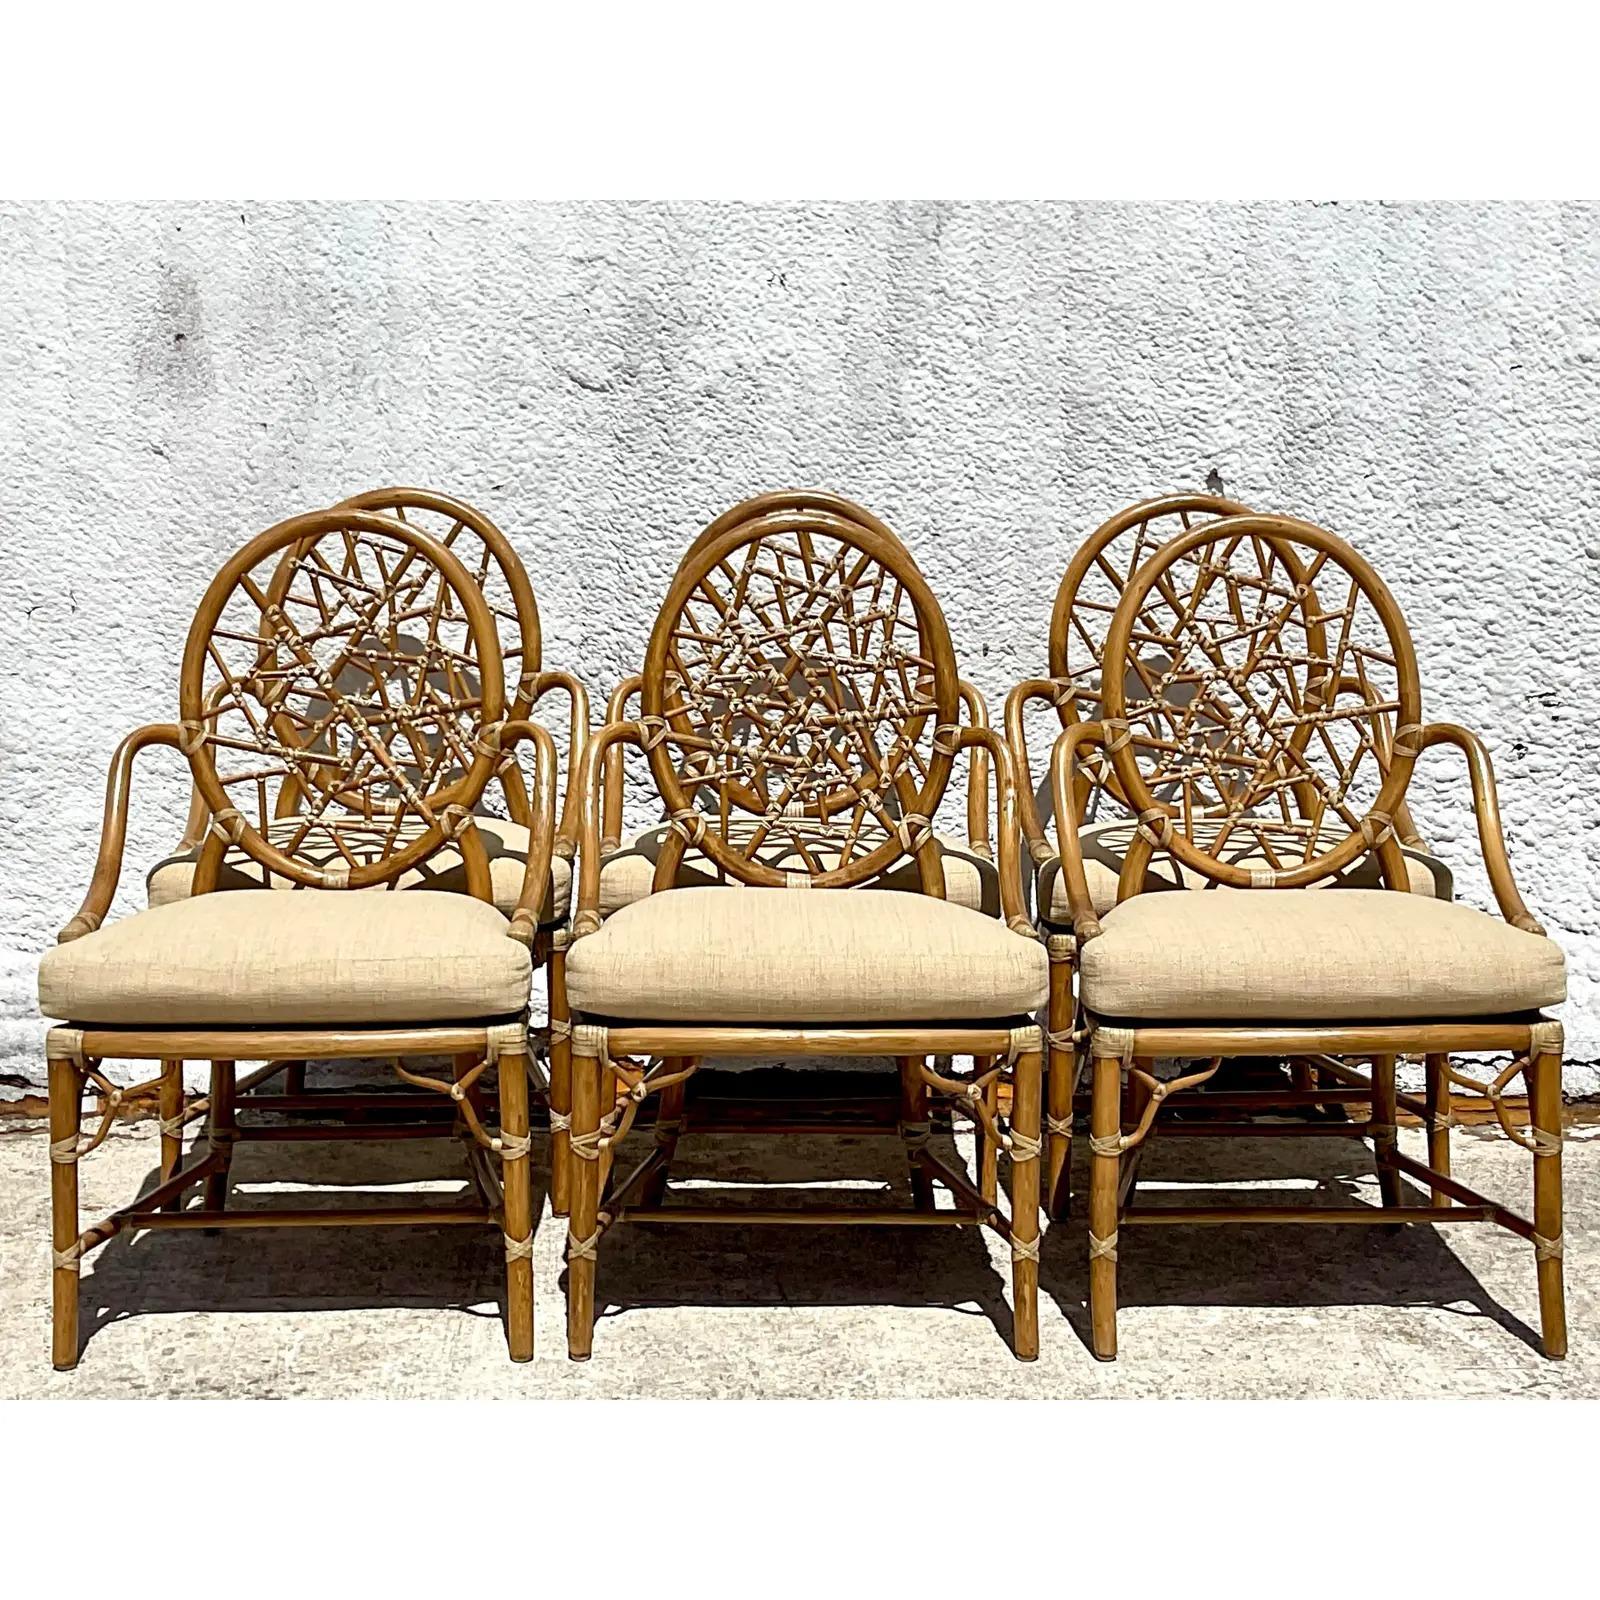 Vintage Coastal McGuire “Cracked Ice” Rattan Dining Chairs - Set of 6 1